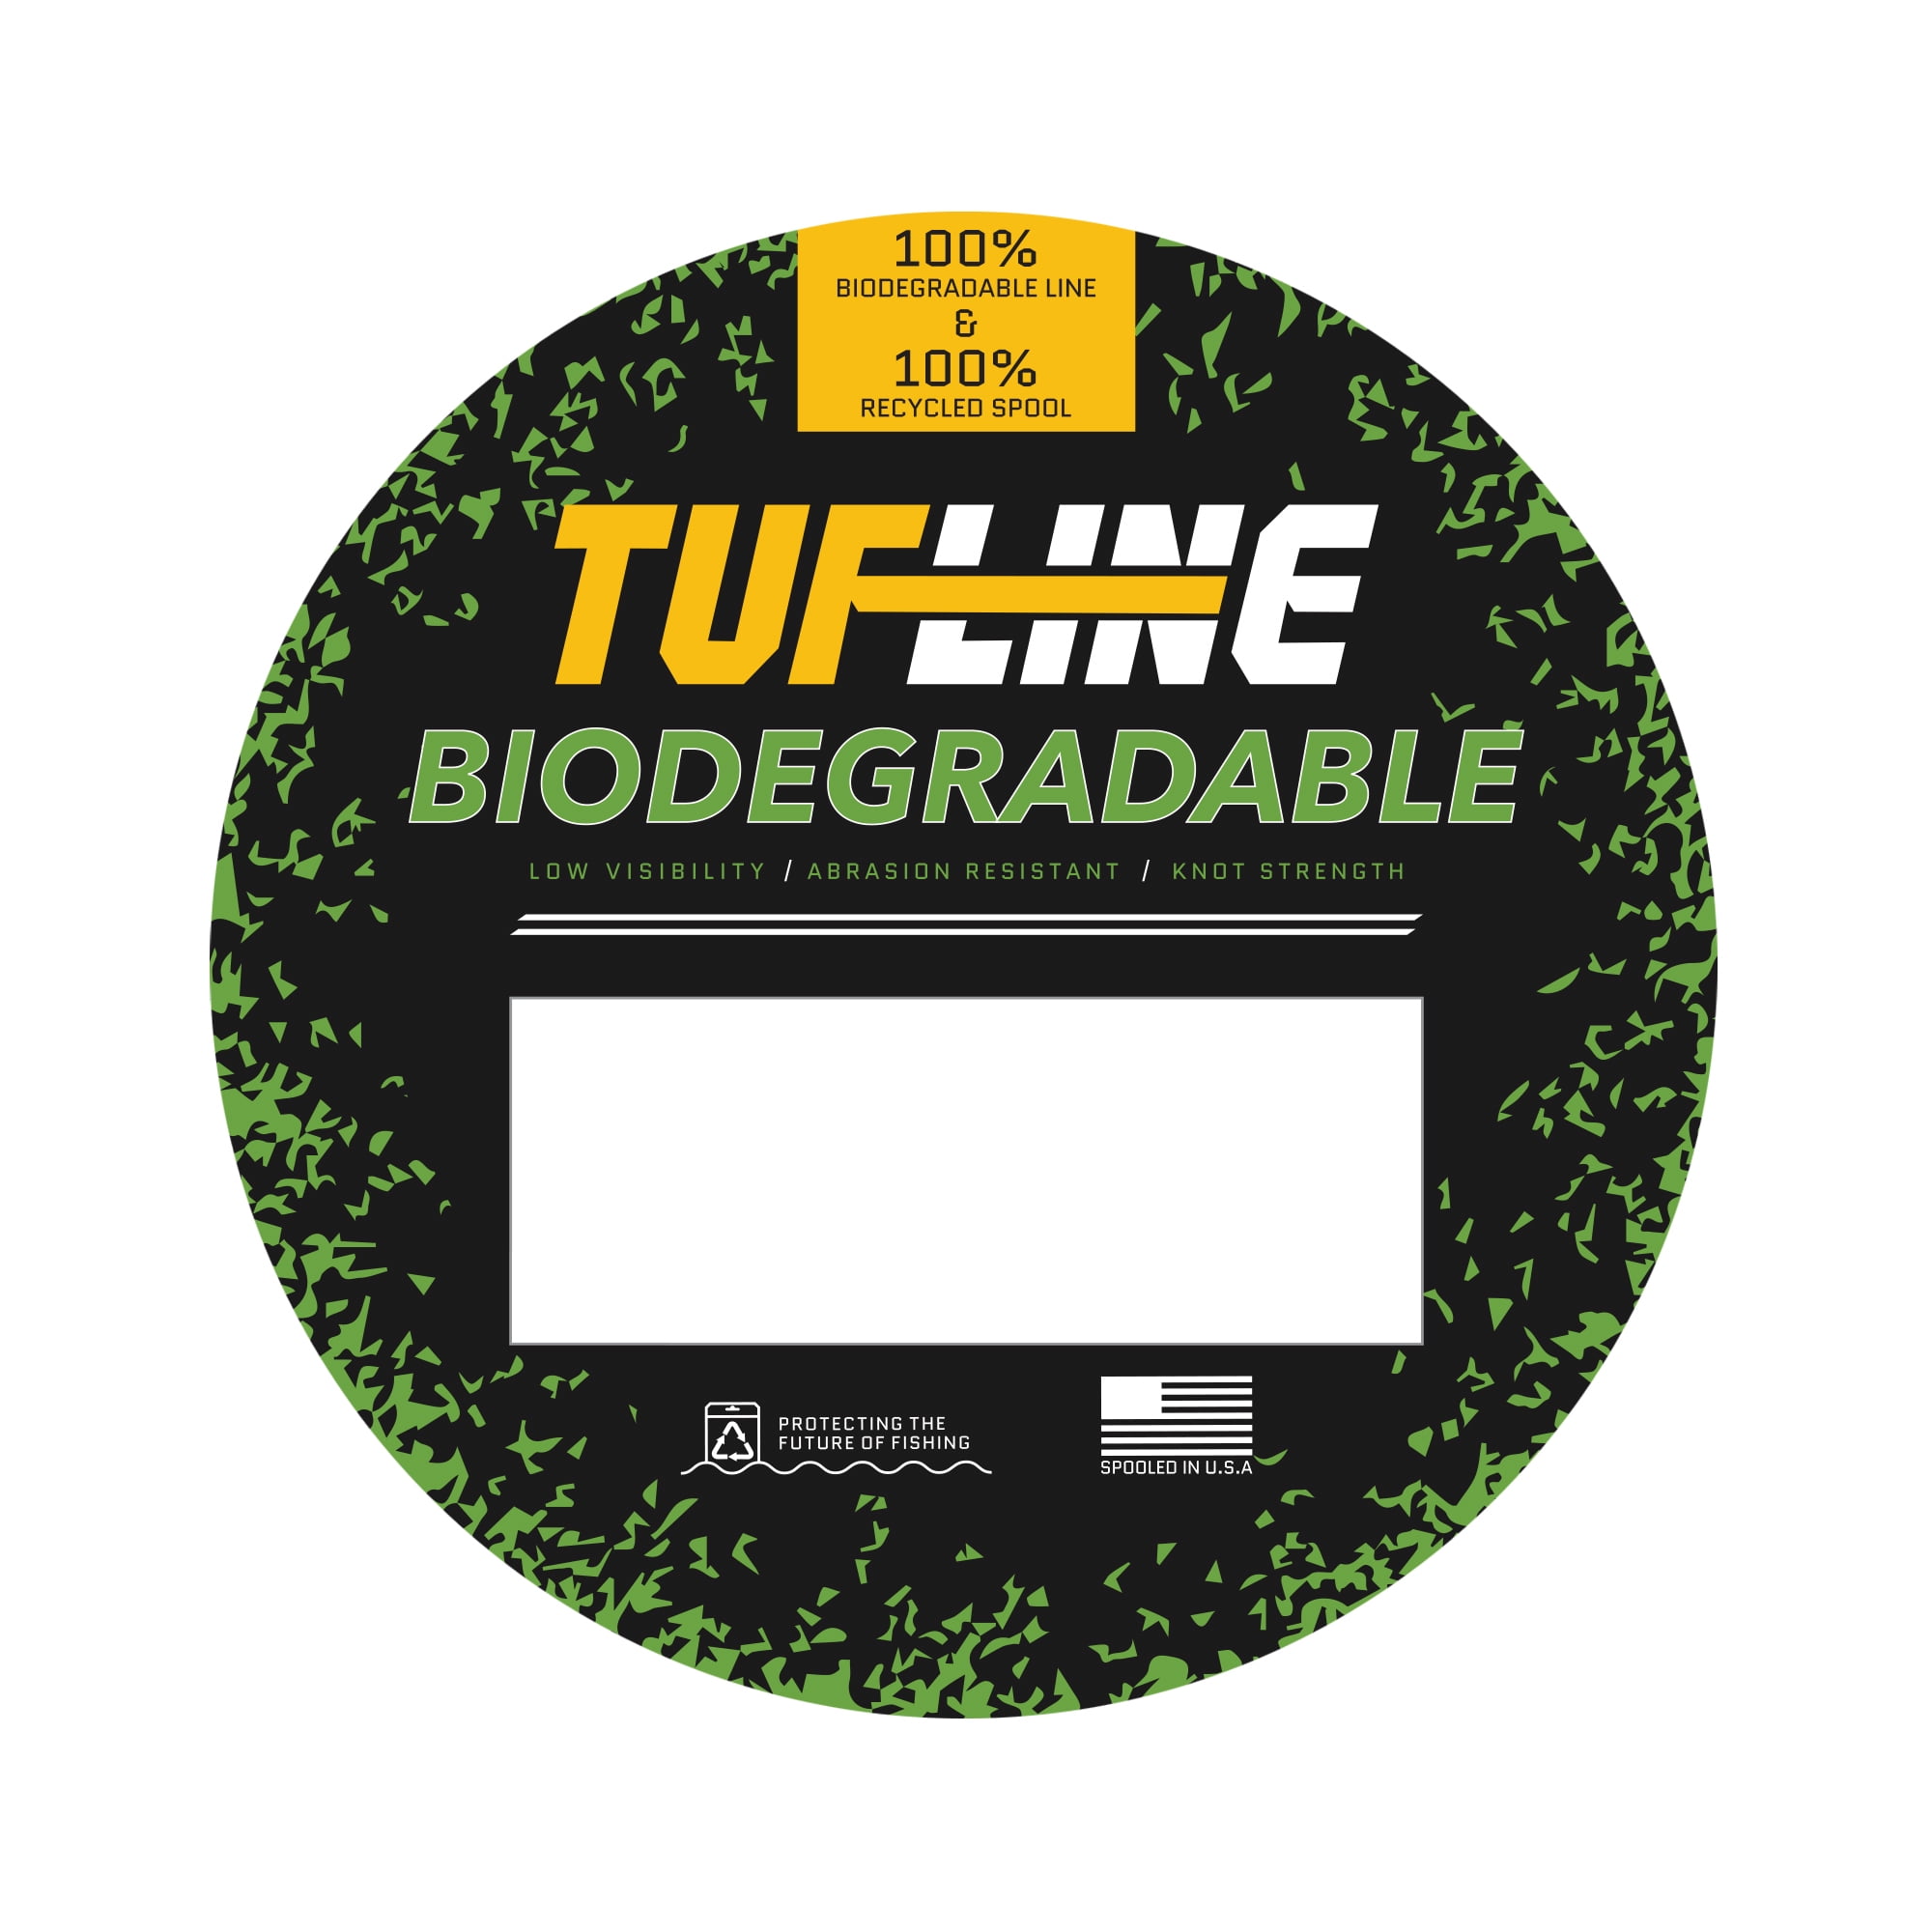 TUF-LINE Clear Biodegradable Monofilament Fishing Line 200 Yard - 12# Test